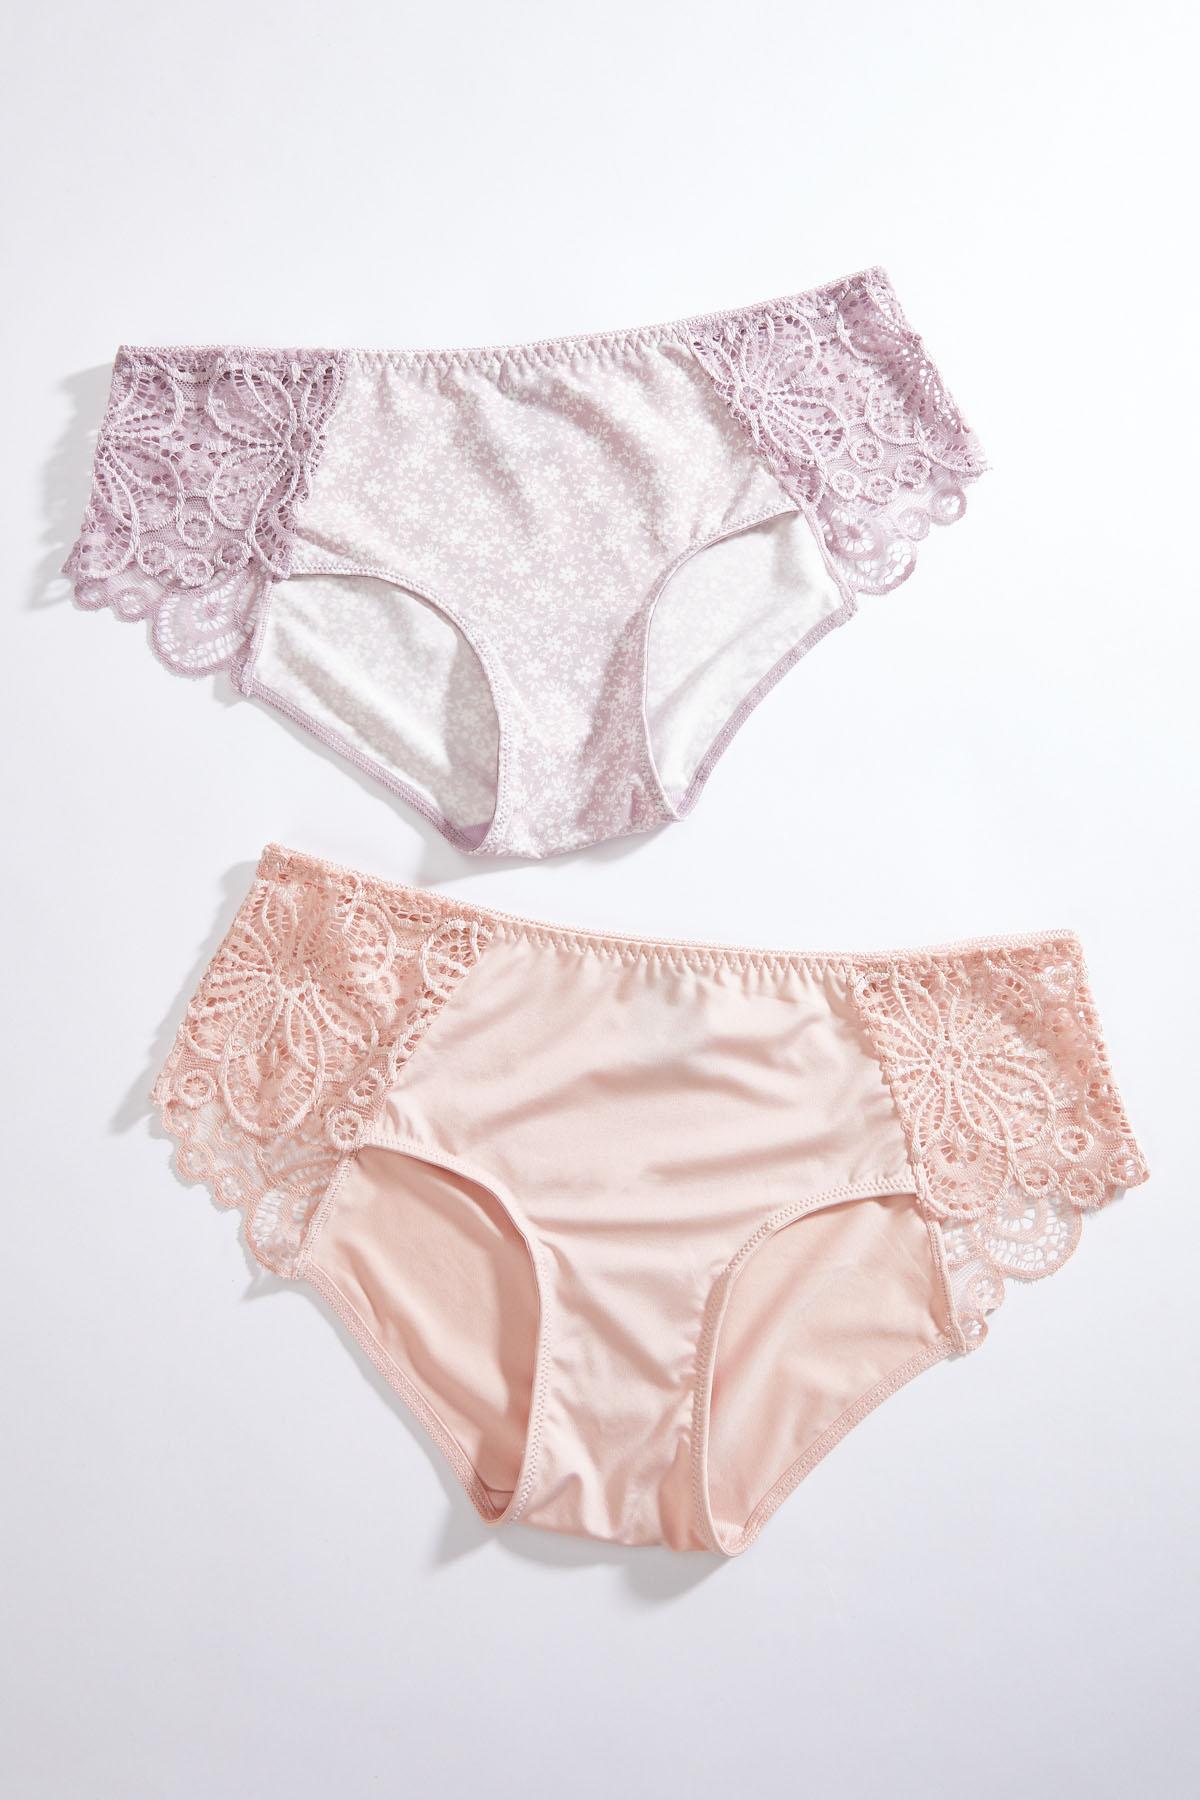 Cato Fashions  Cato Plus Size Blossom Lace Panty Set